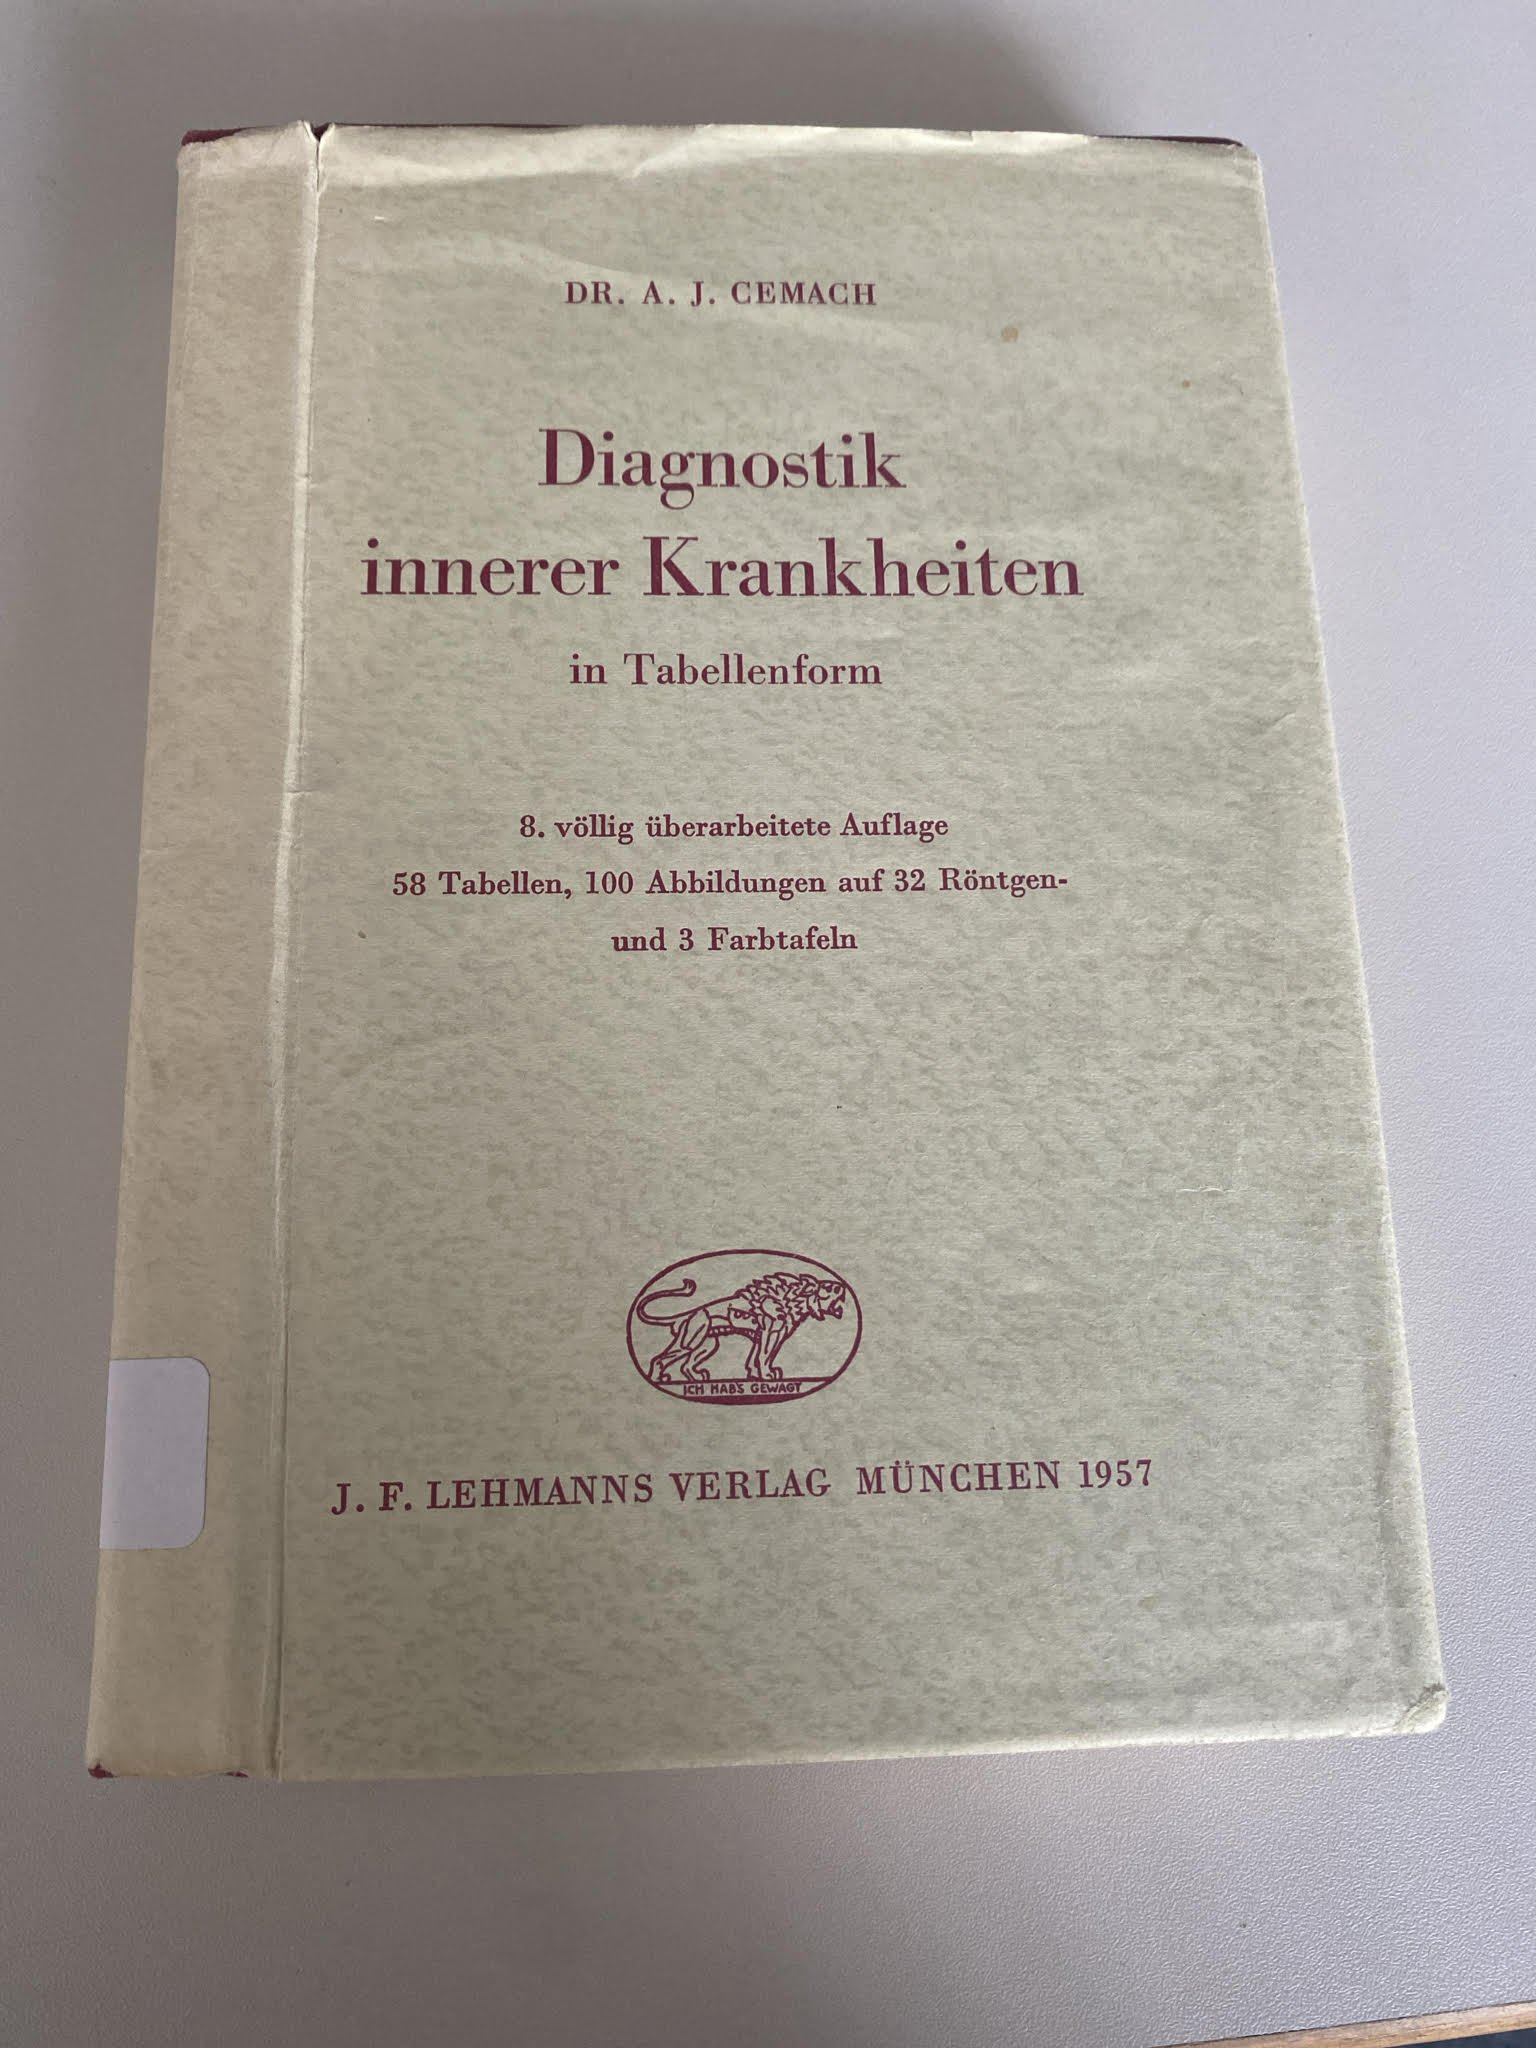 Diagnostik innerer Krankheiten (Krankenhausmuseum Bielefeld e.V. CC BY-NC-SA)